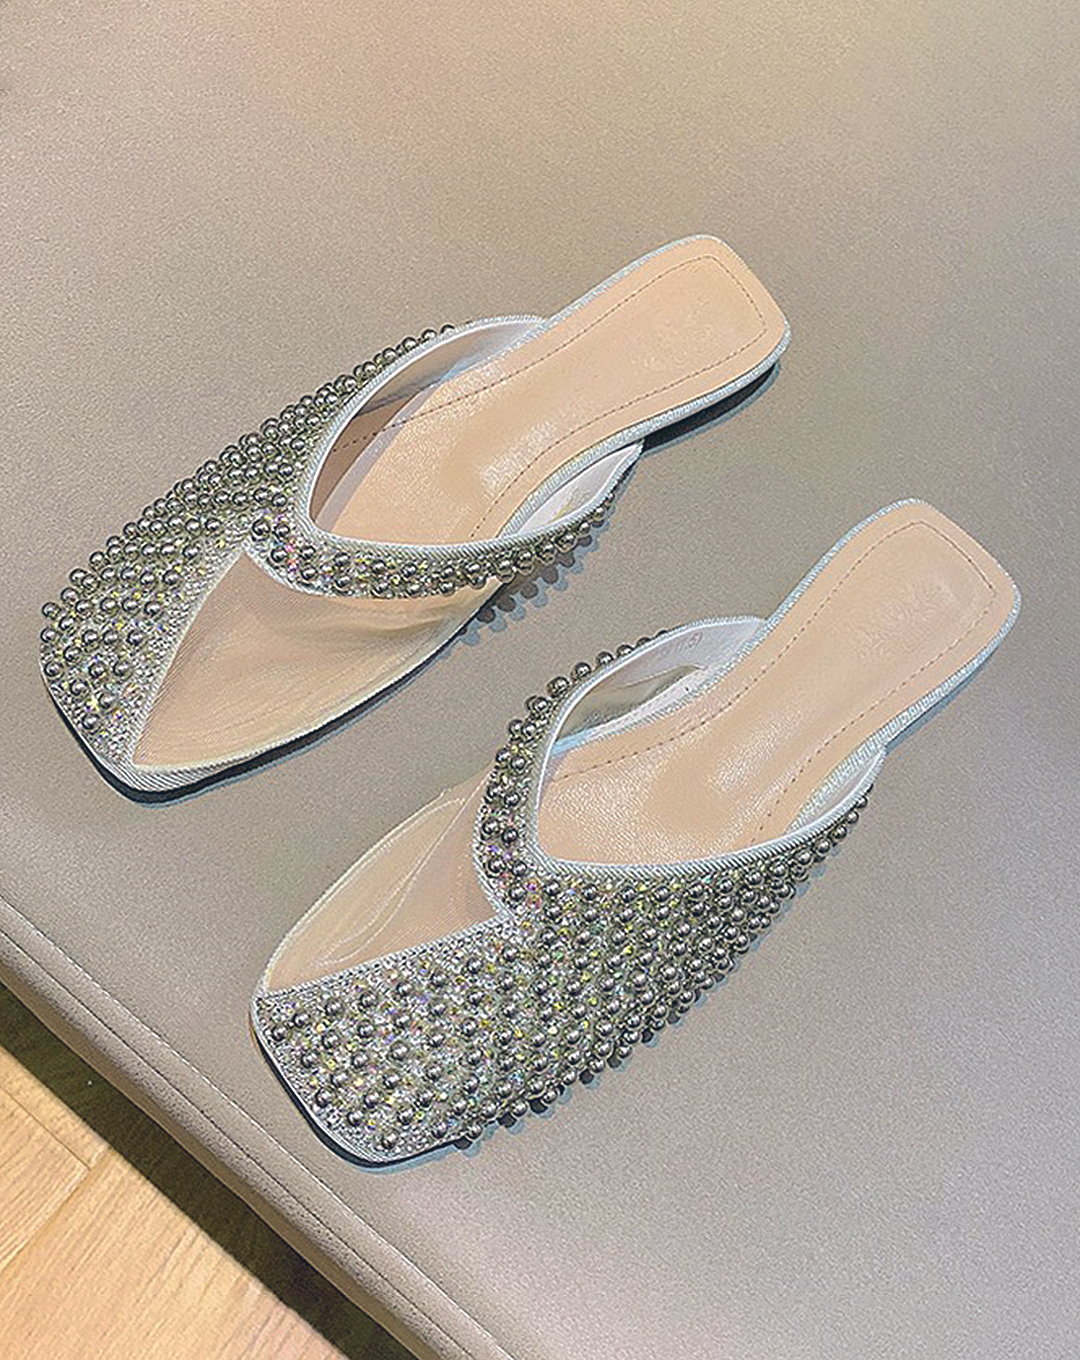 ♀Decorative Design Mule Sandals